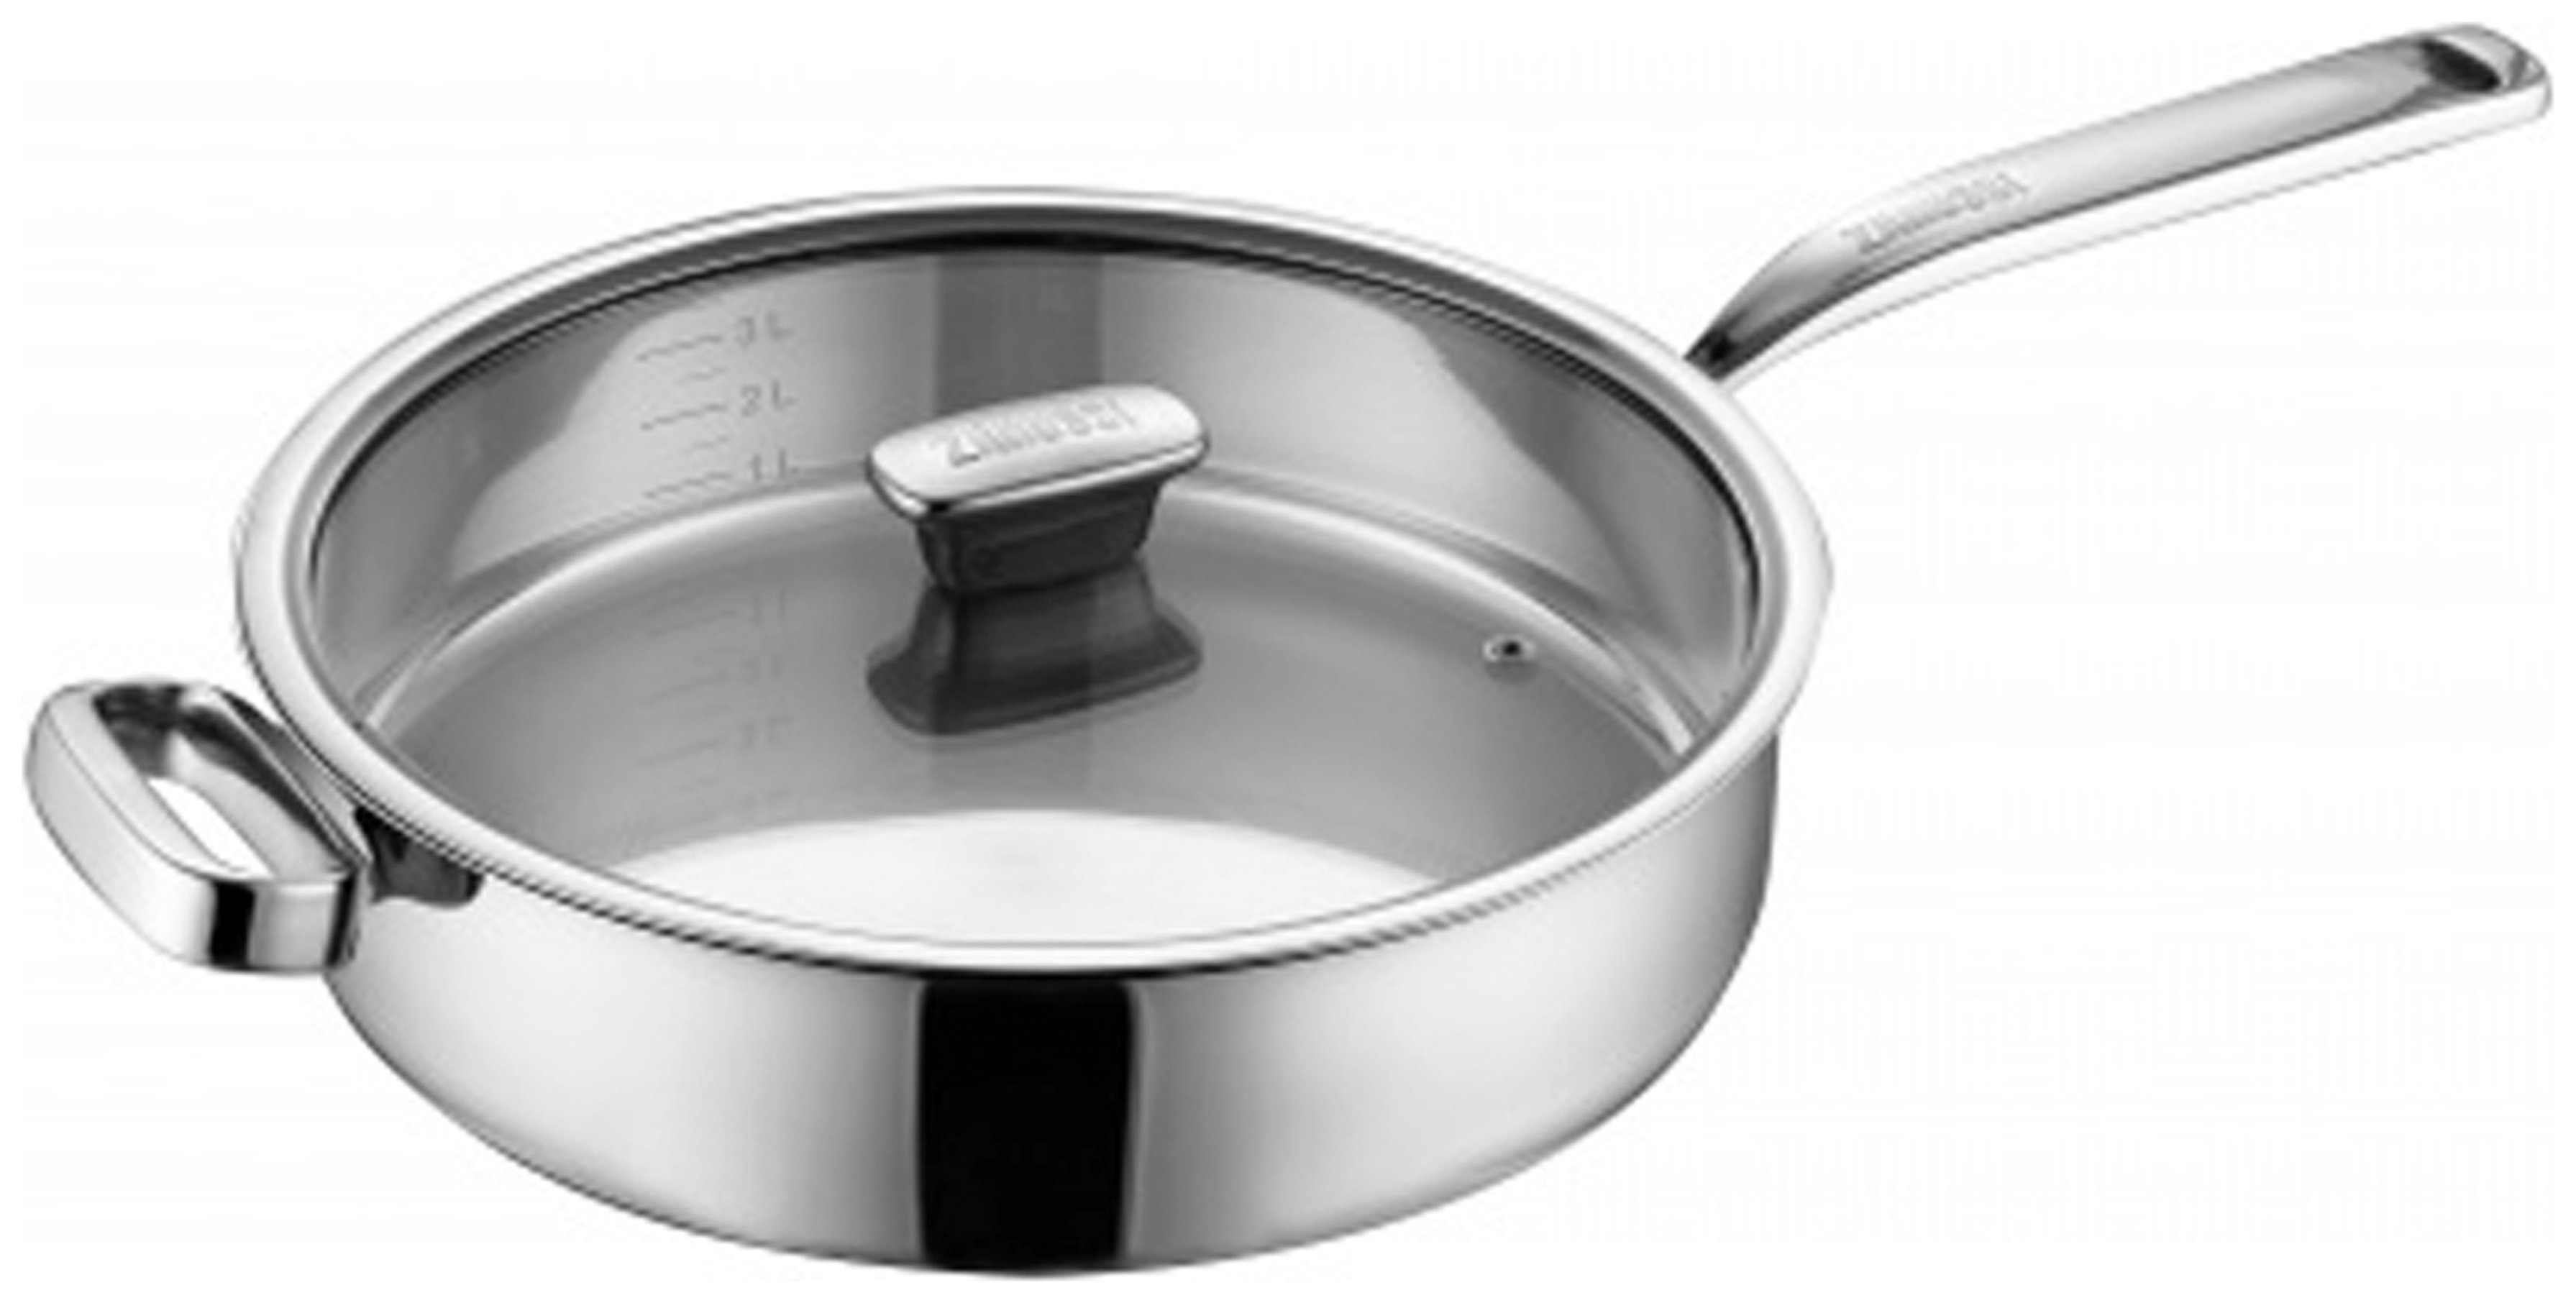 Zanussi Positano 28cm Stainless Steel Saute Pan with Lid